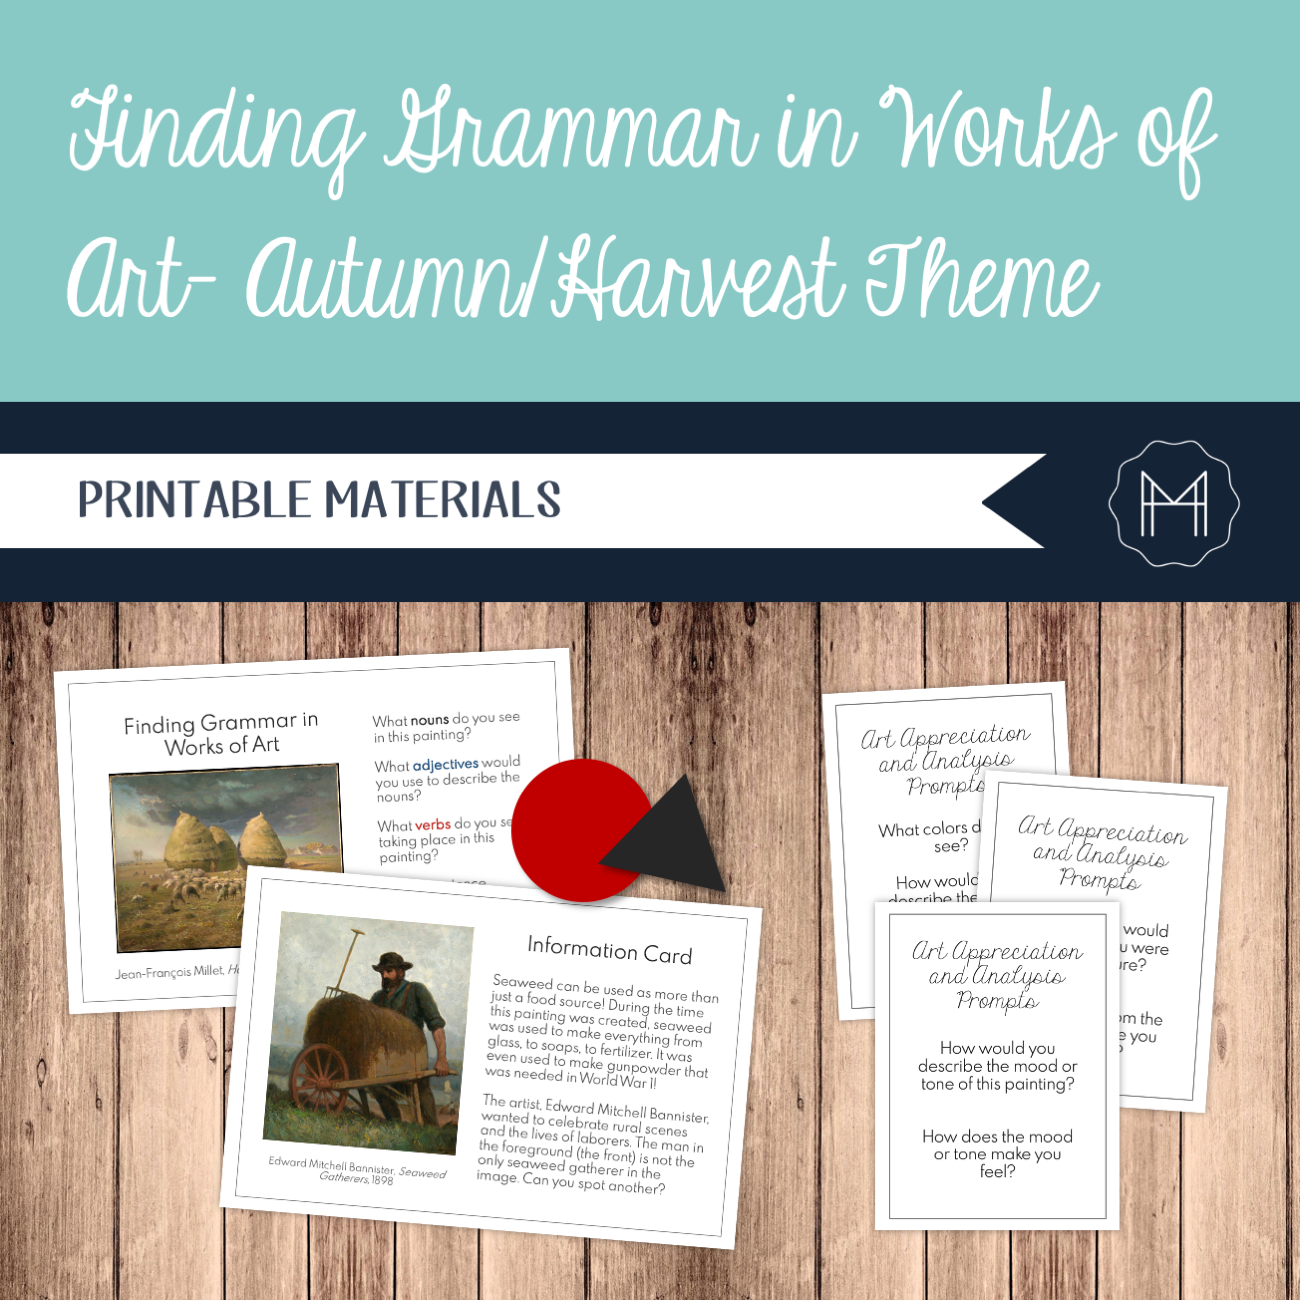 Finding Grammar in Works of Art - Autumn/Harvest Theme